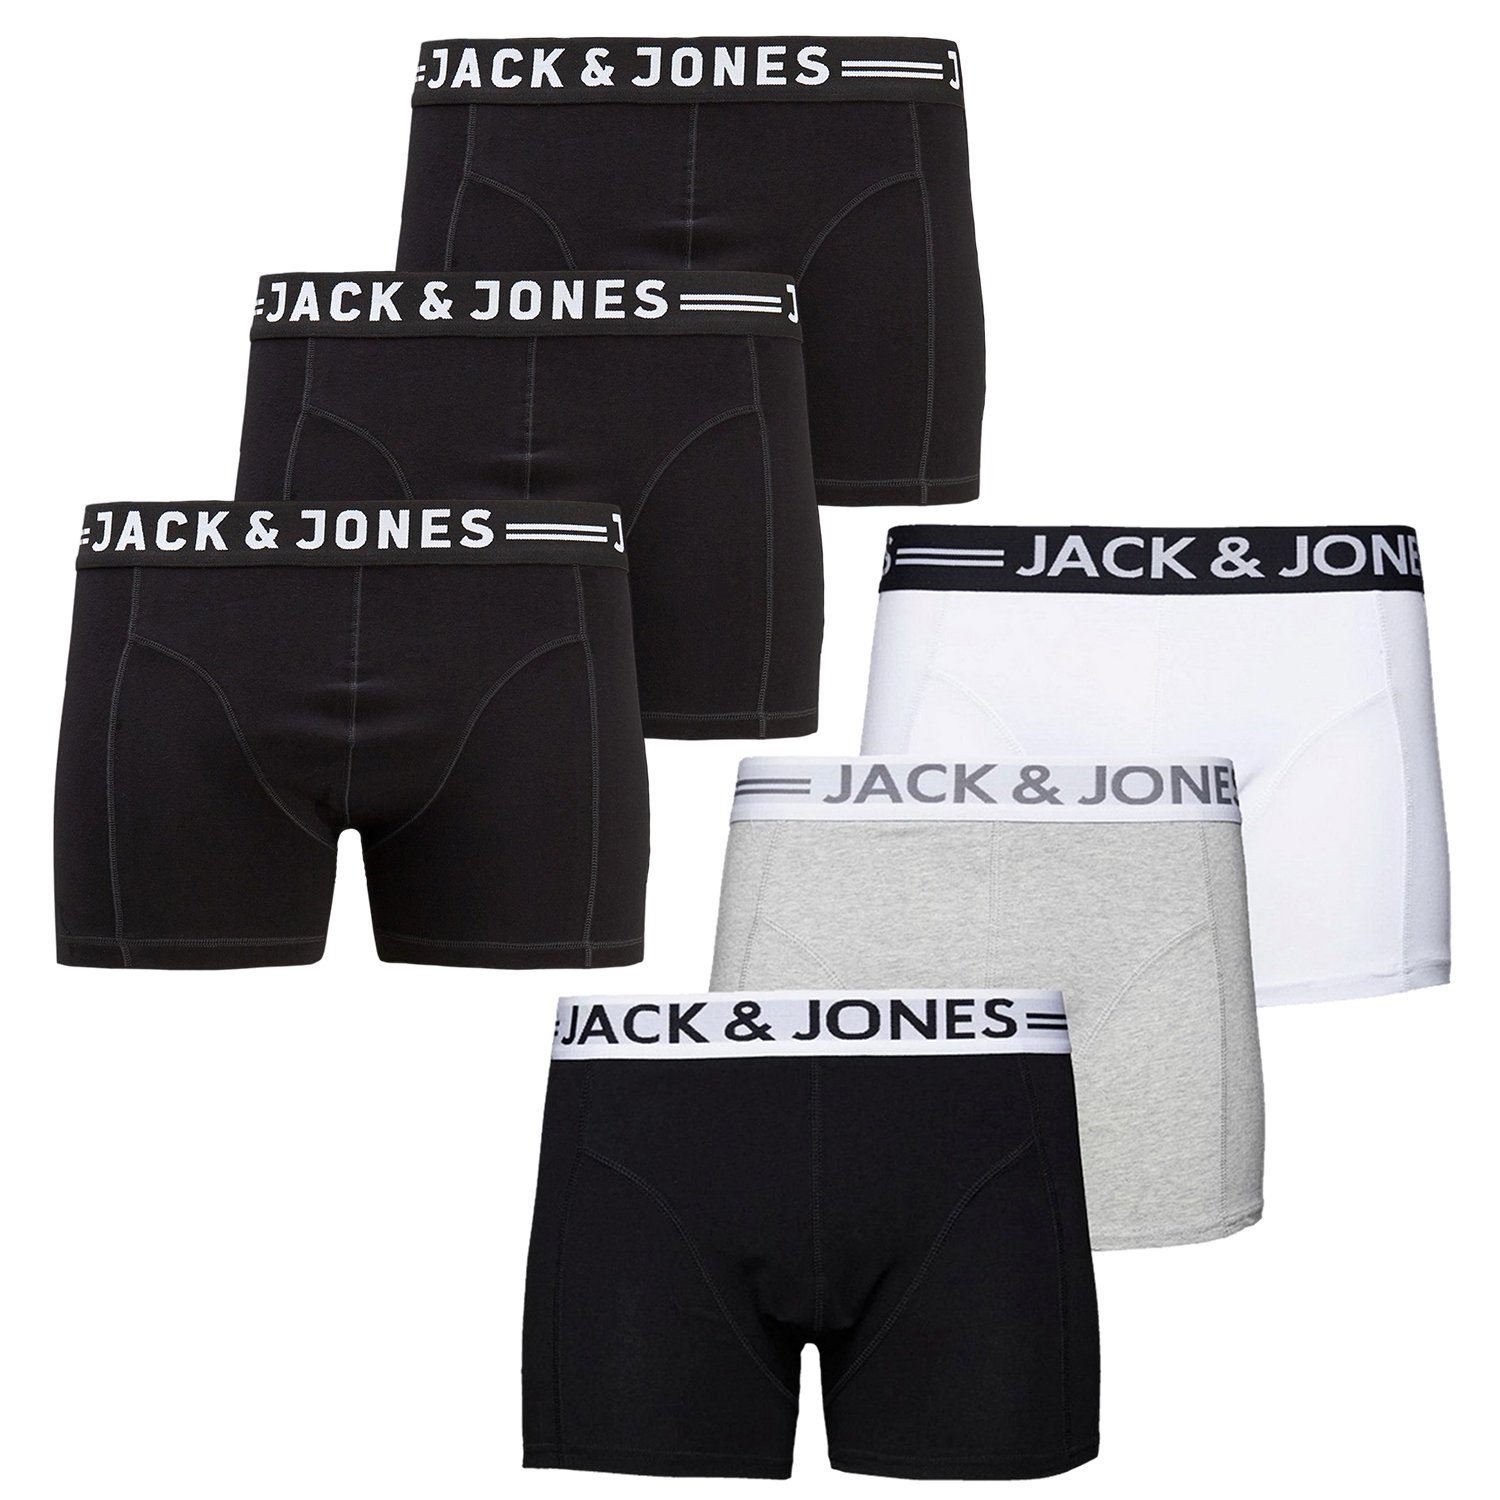 Jack Pack Jones (6-St) Logo 6er SENSE & (12081832) Boxershorts & Webbund Black waistband Black Grey/White/Black mit